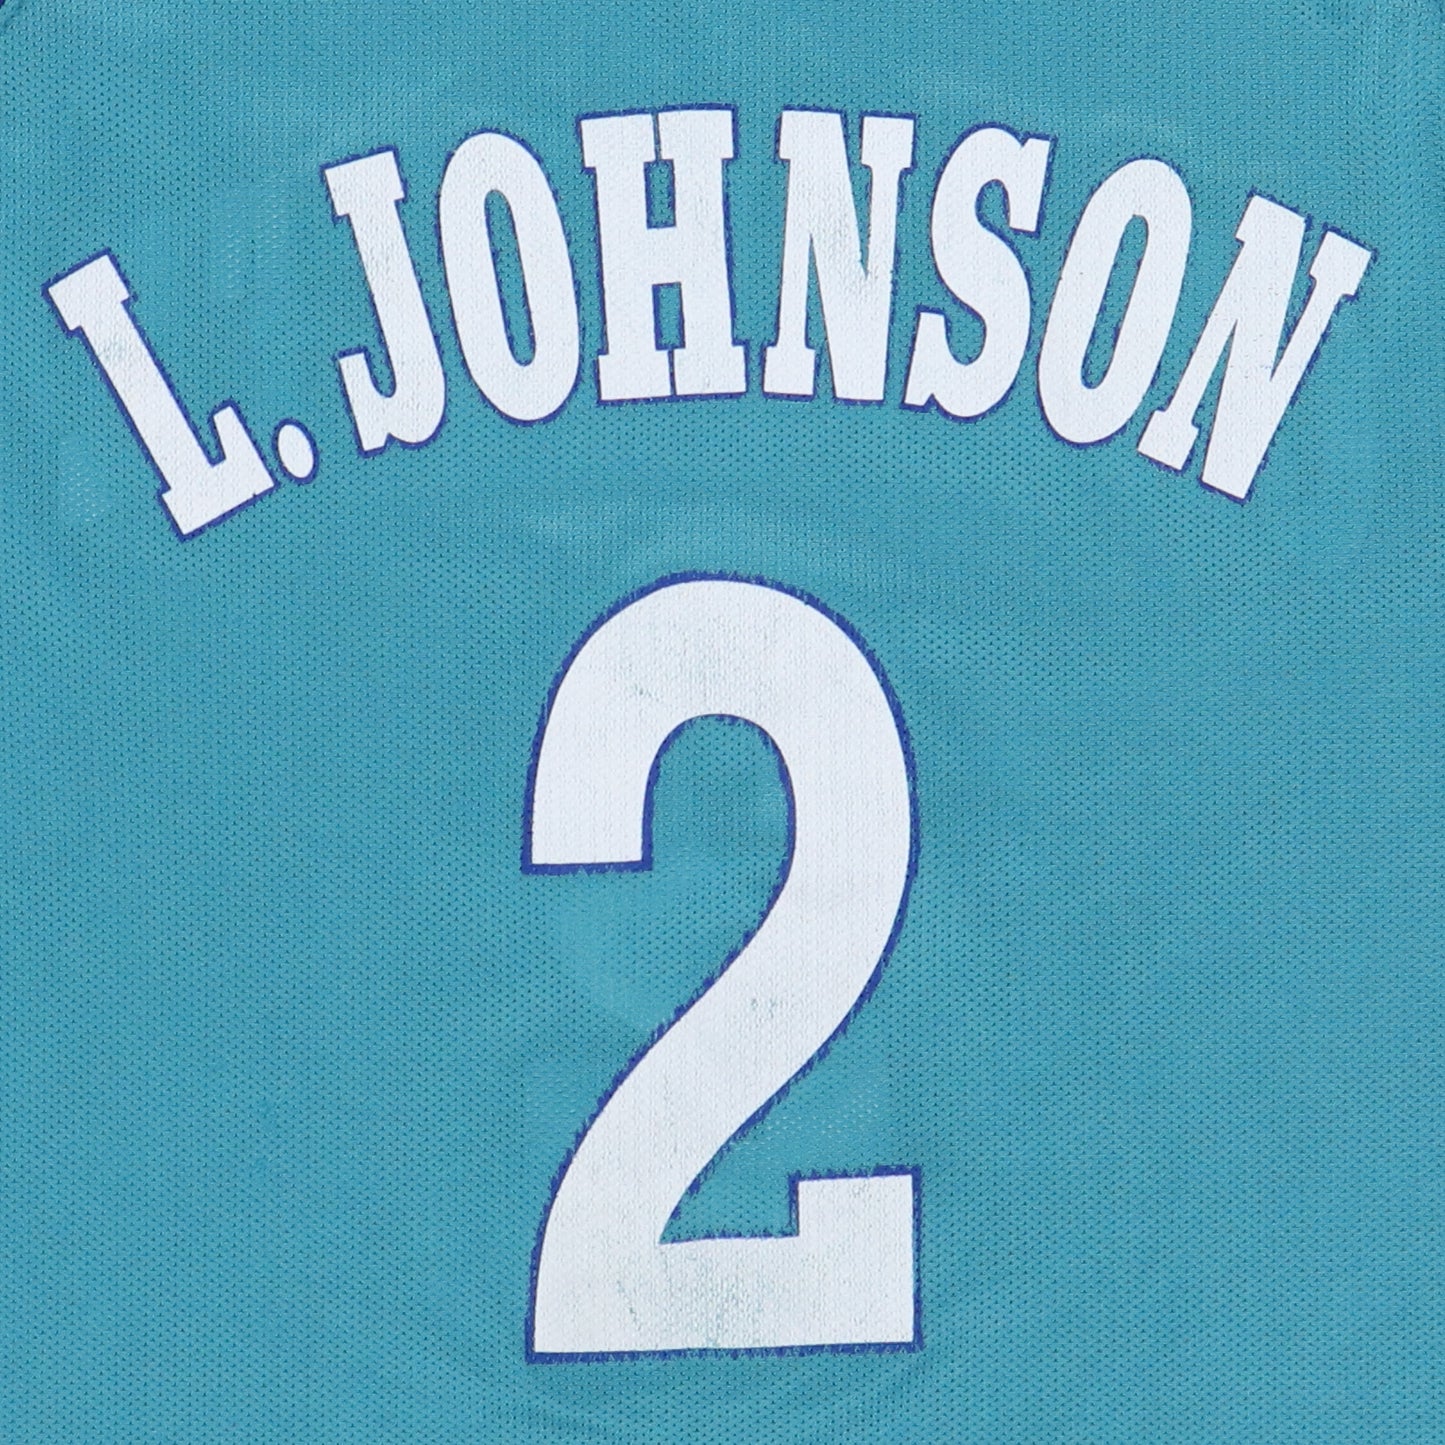 1990s Larry Johnson Charlotte Hornets NBA Jersey